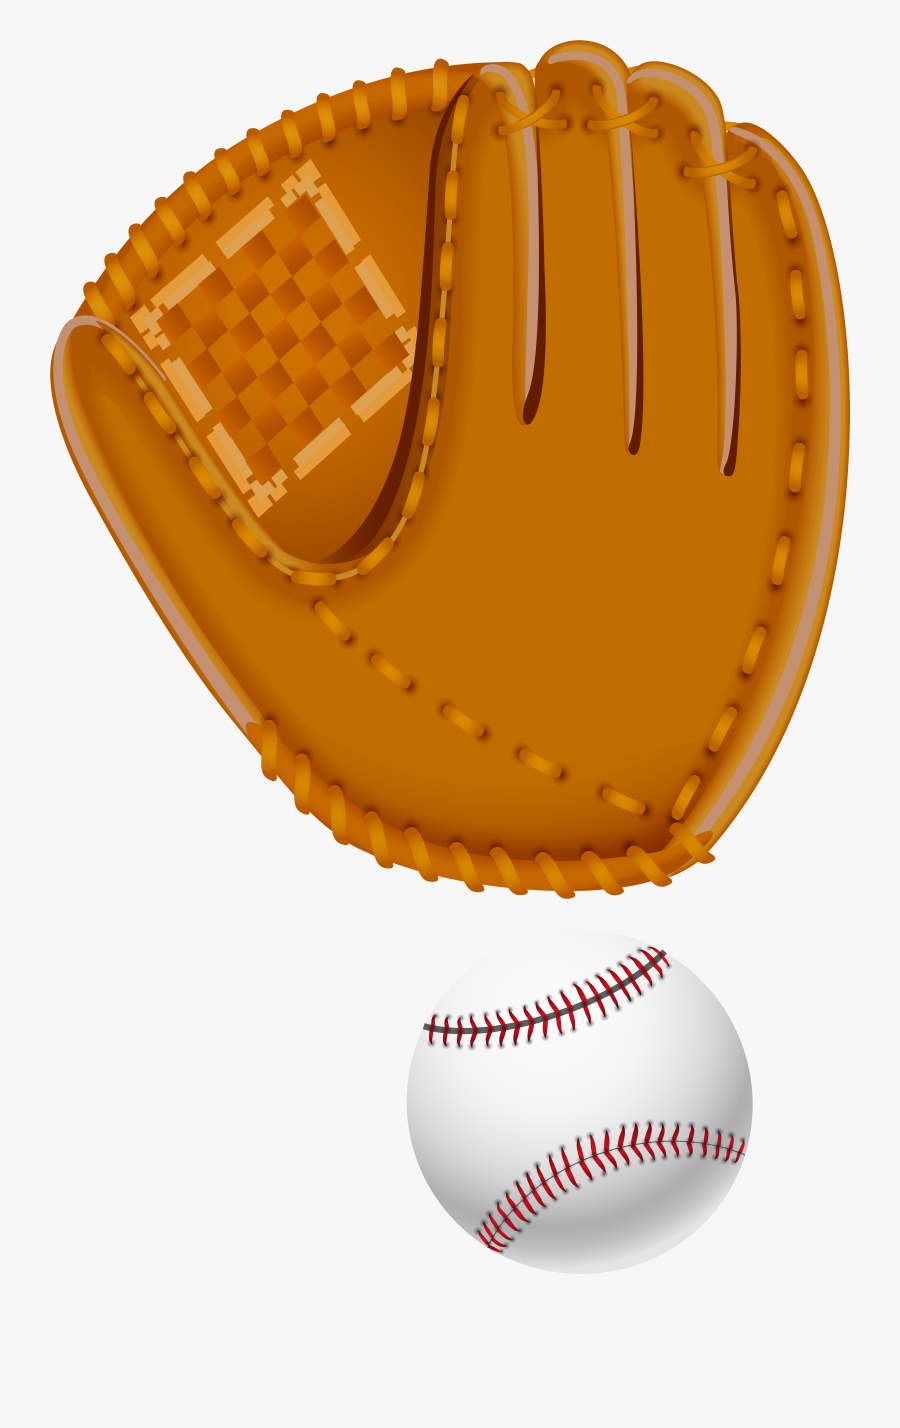 Glove Clip Art Image - Baseball Glove Clipart Png, Transparent Clipart